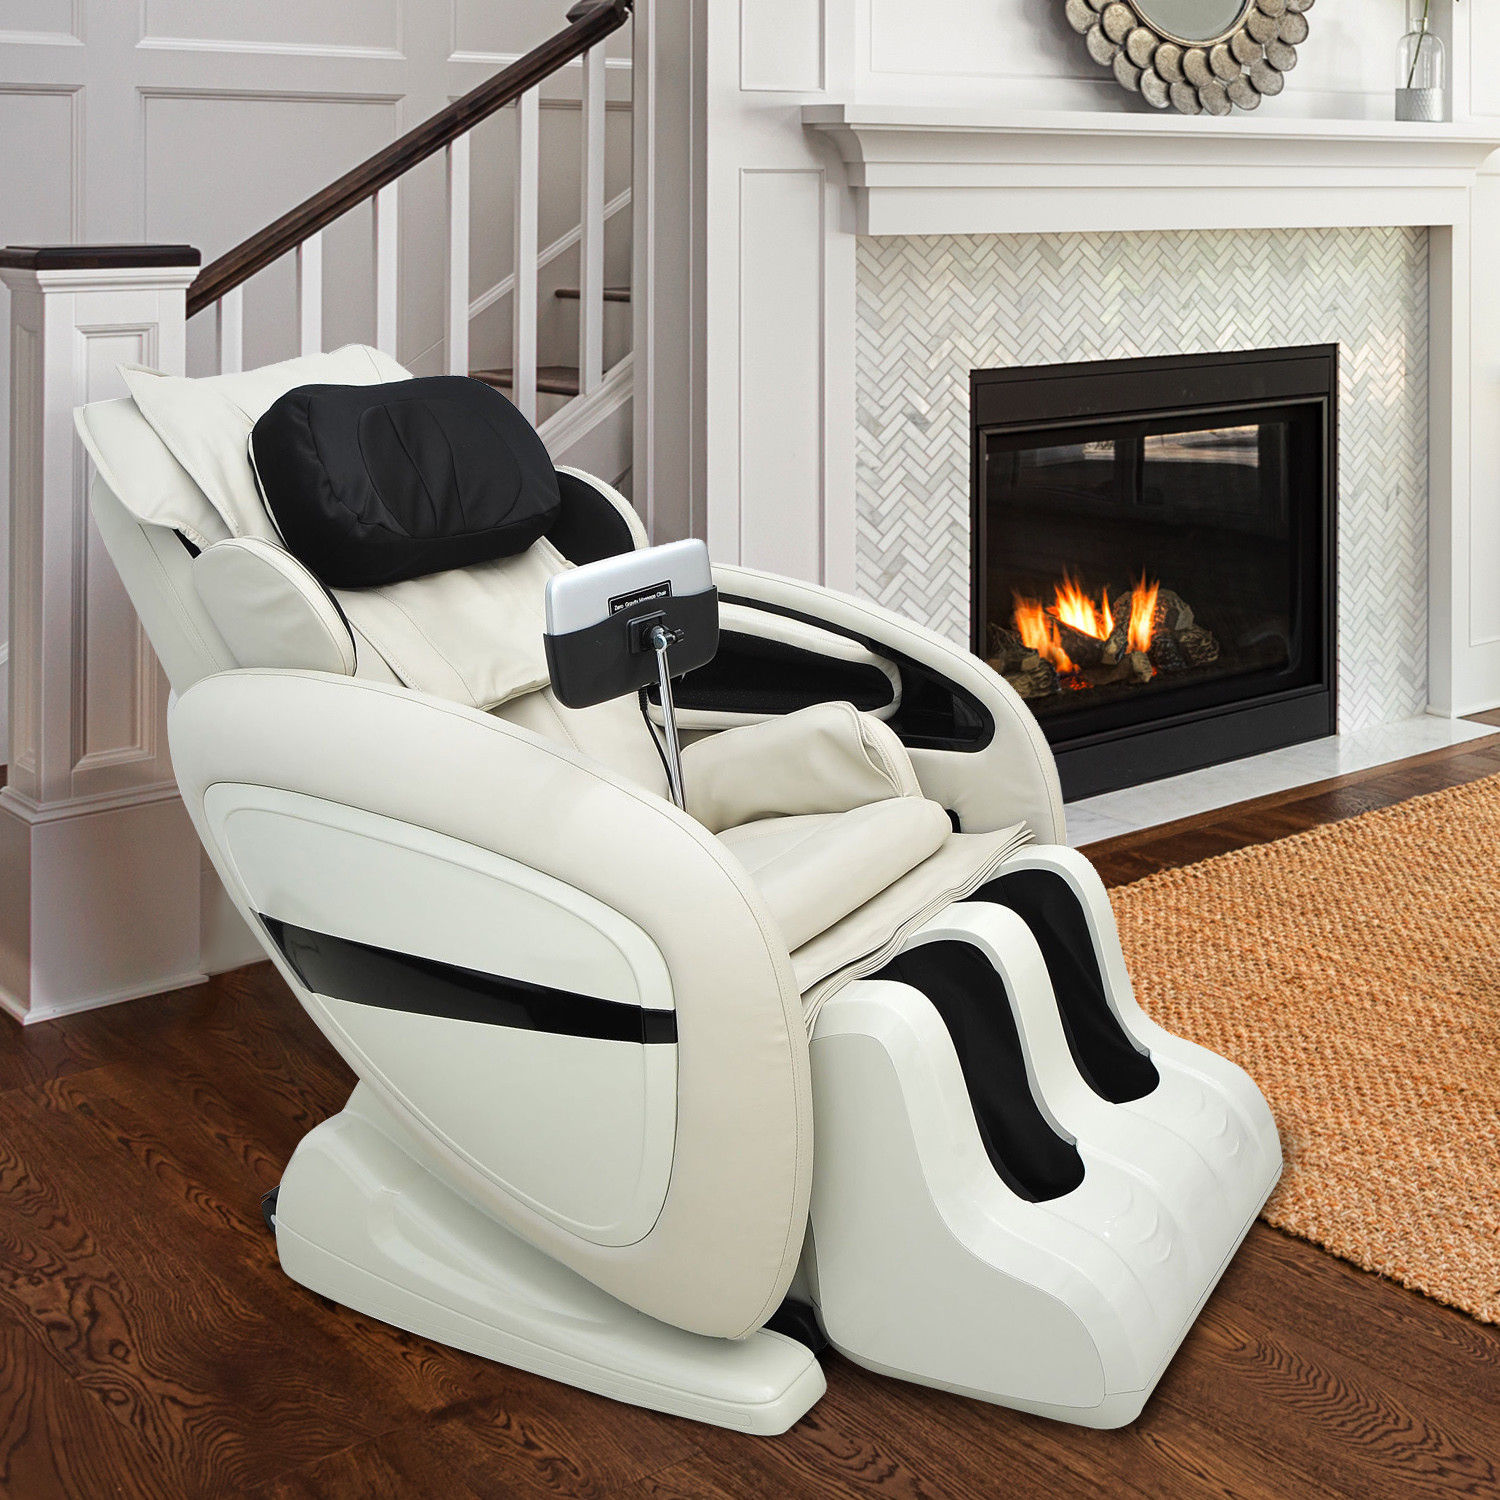 Homcom Electric Full Massage Chair, Esright Massage Recliner Chair Uk